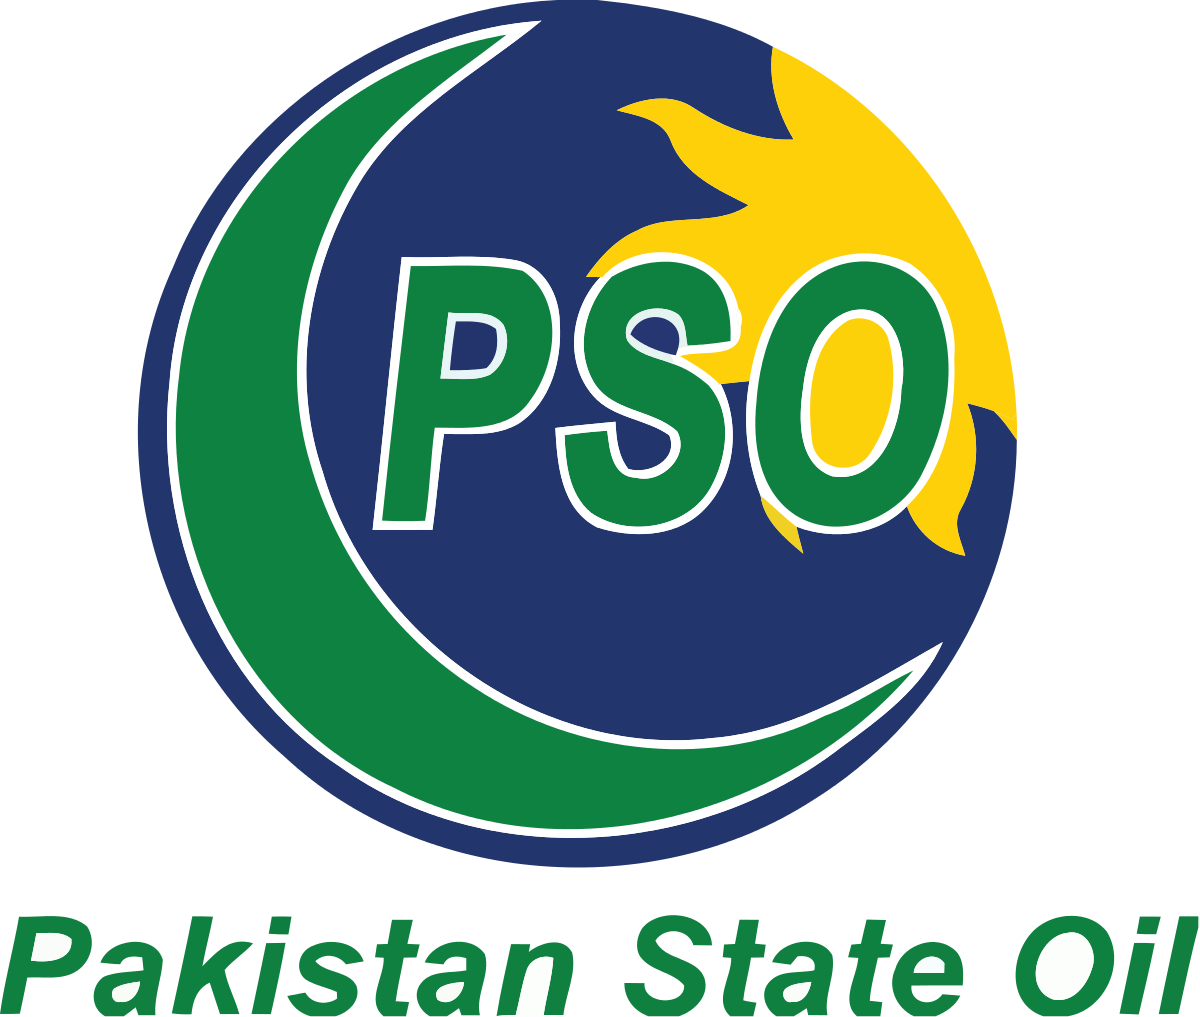 Pakistan Oil Company Logo - Pakistan State Oil